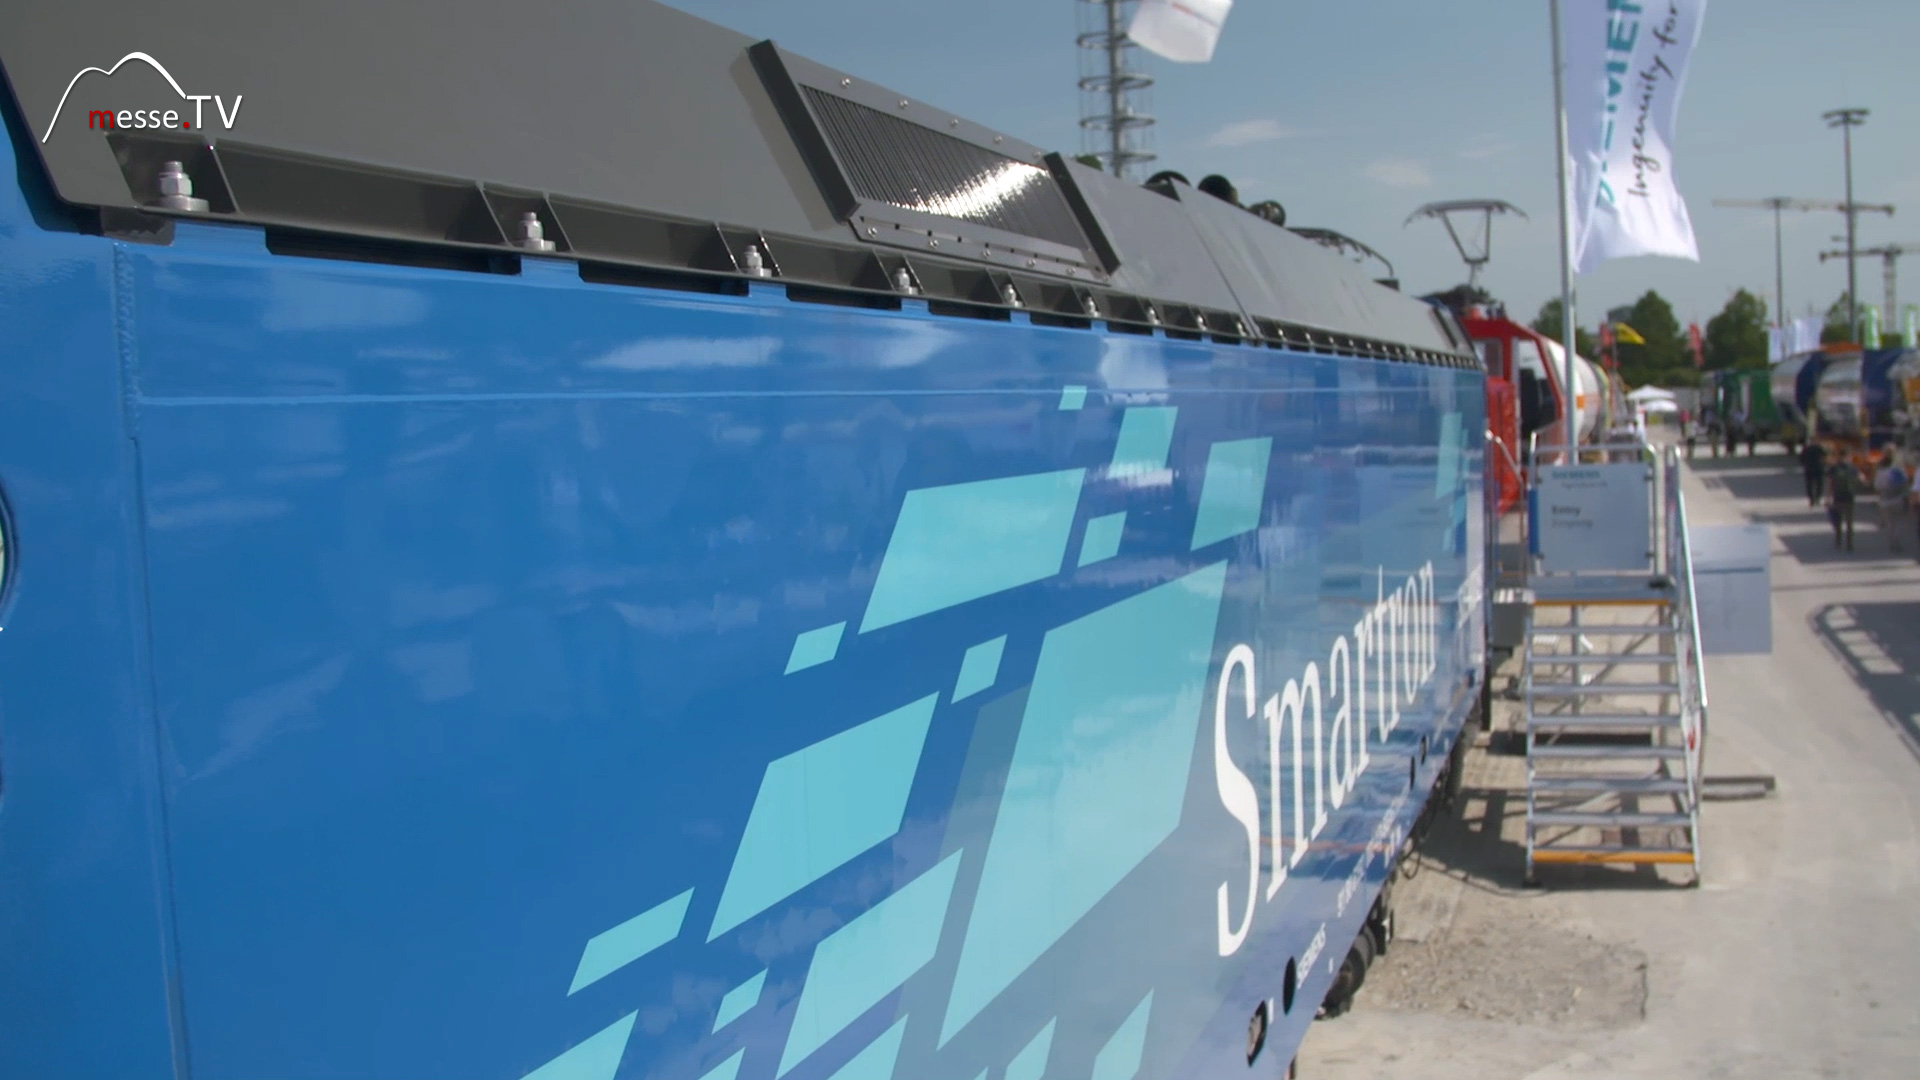 Siemens Smartron Locomotive Open Area Munich Trade Fair